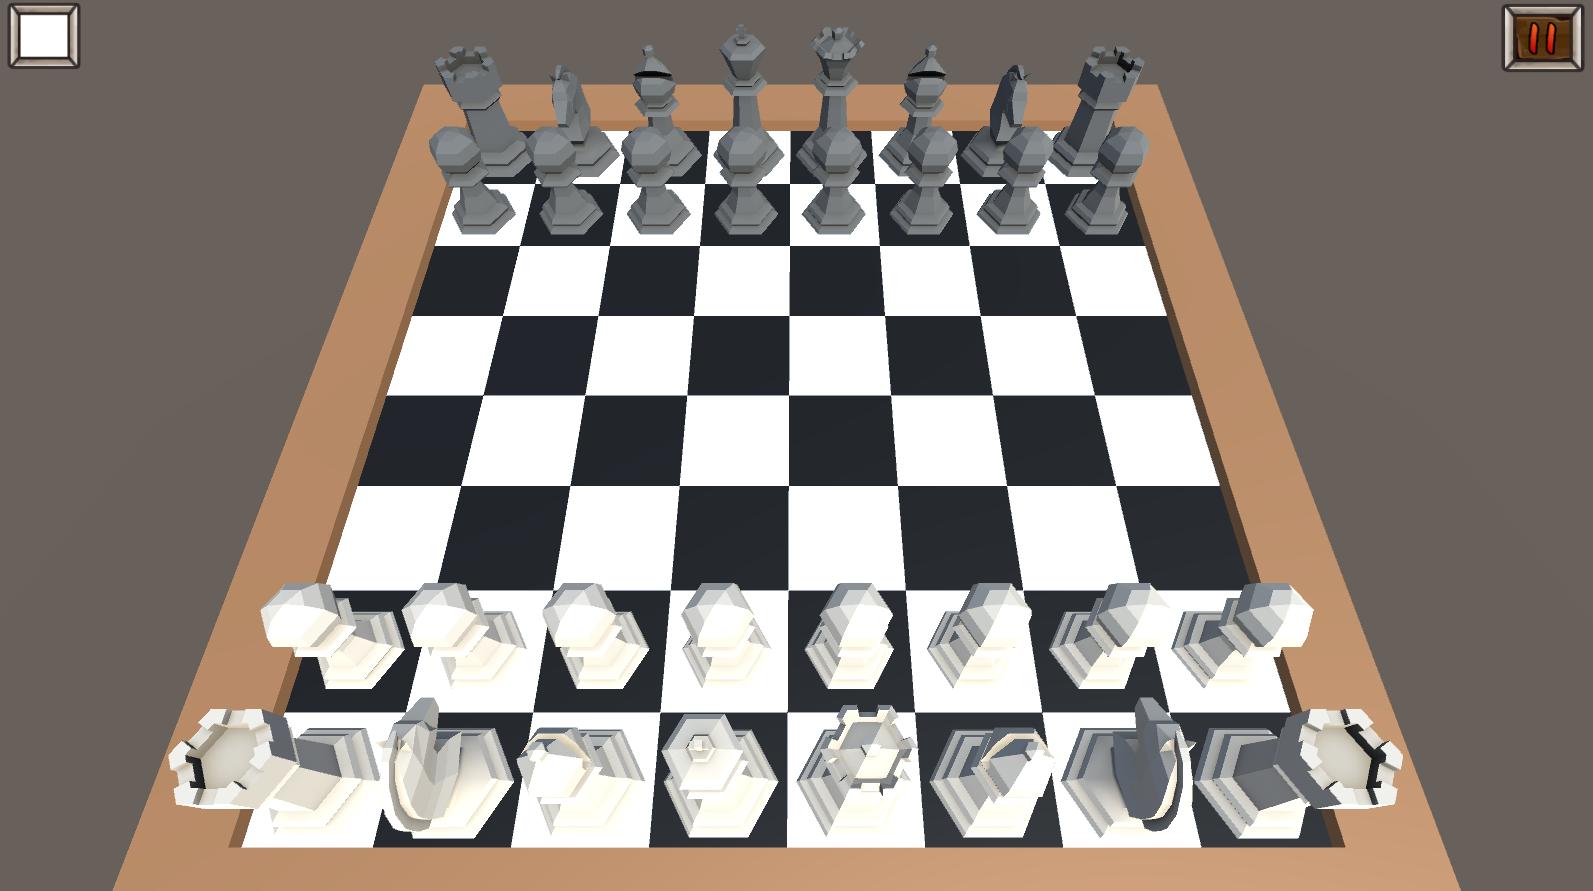 дота шахматы 21 века фото 39